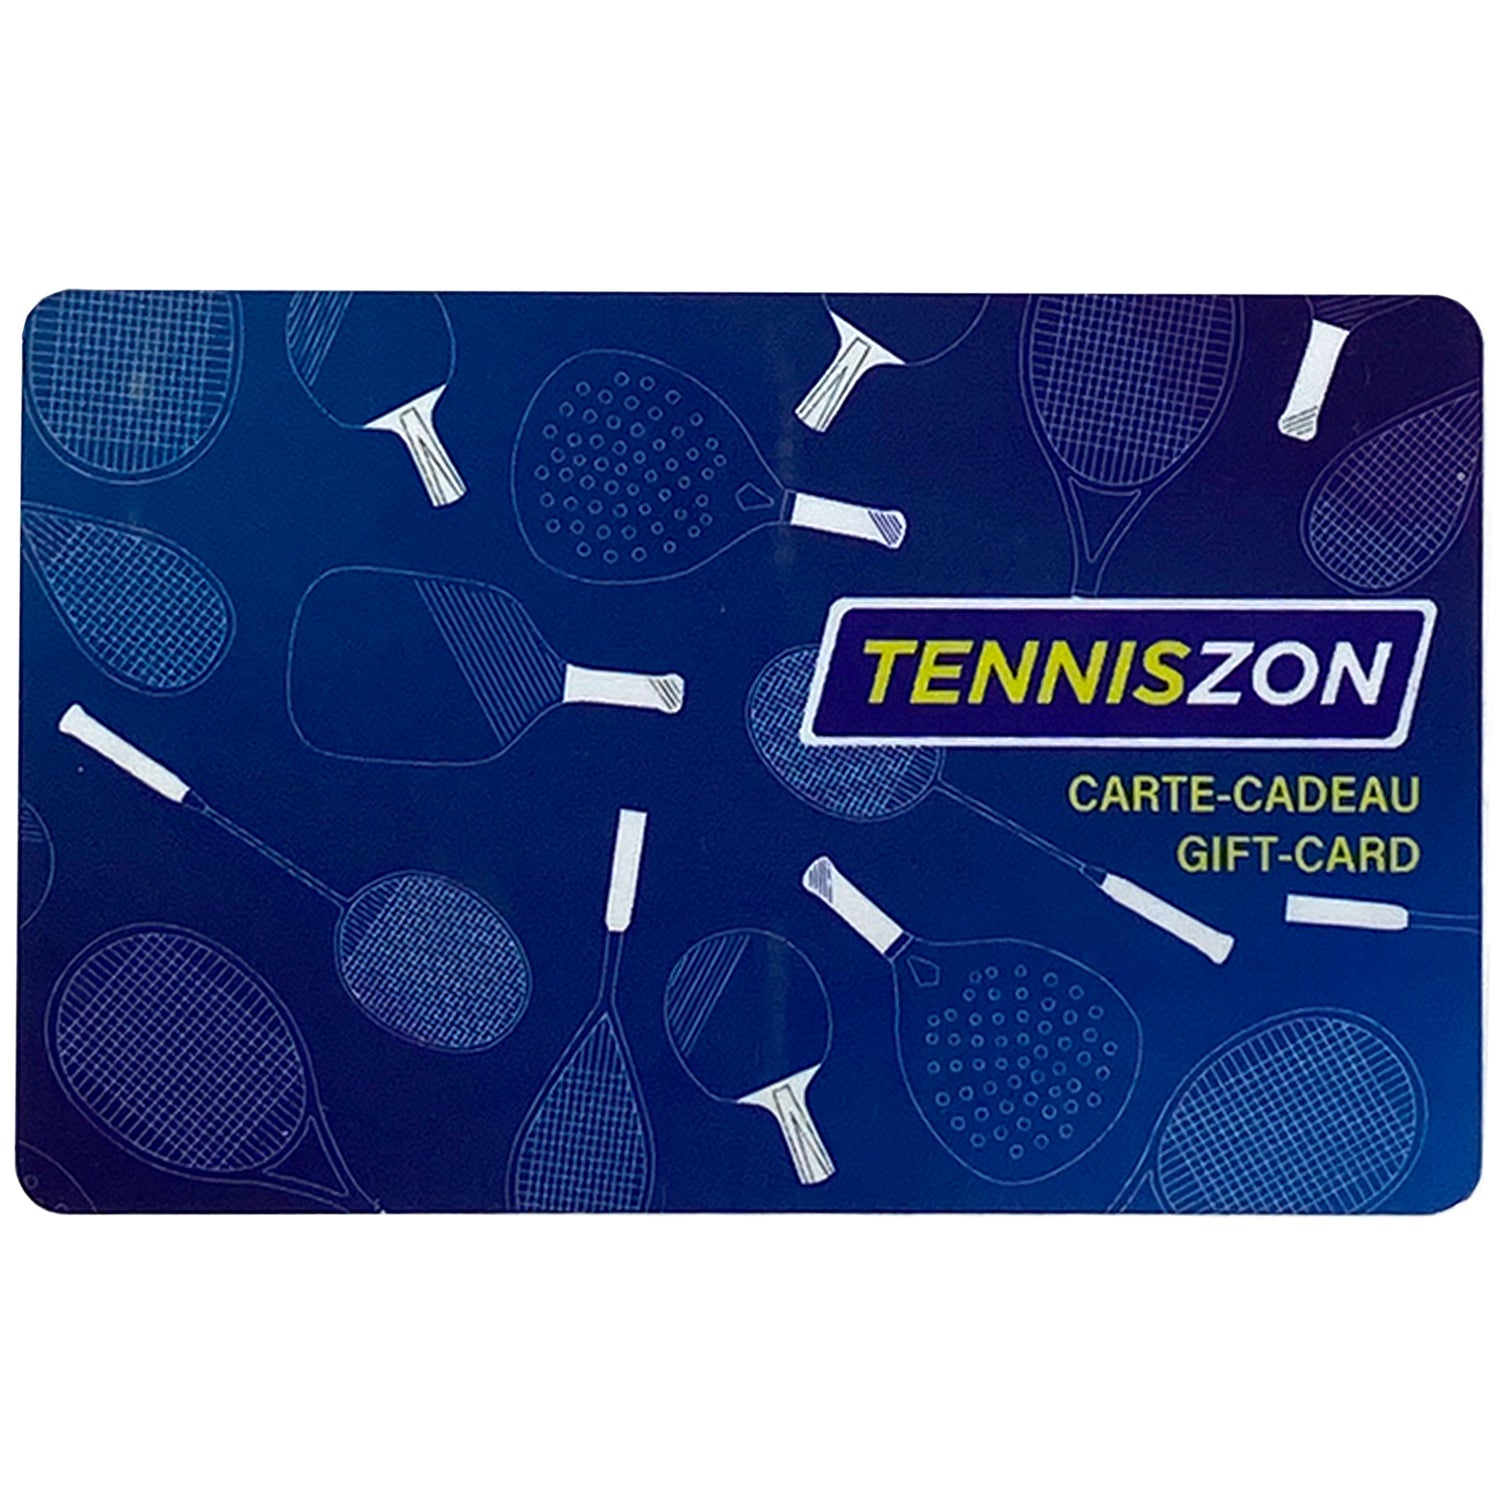 2022 Tenniszon Gift Guide